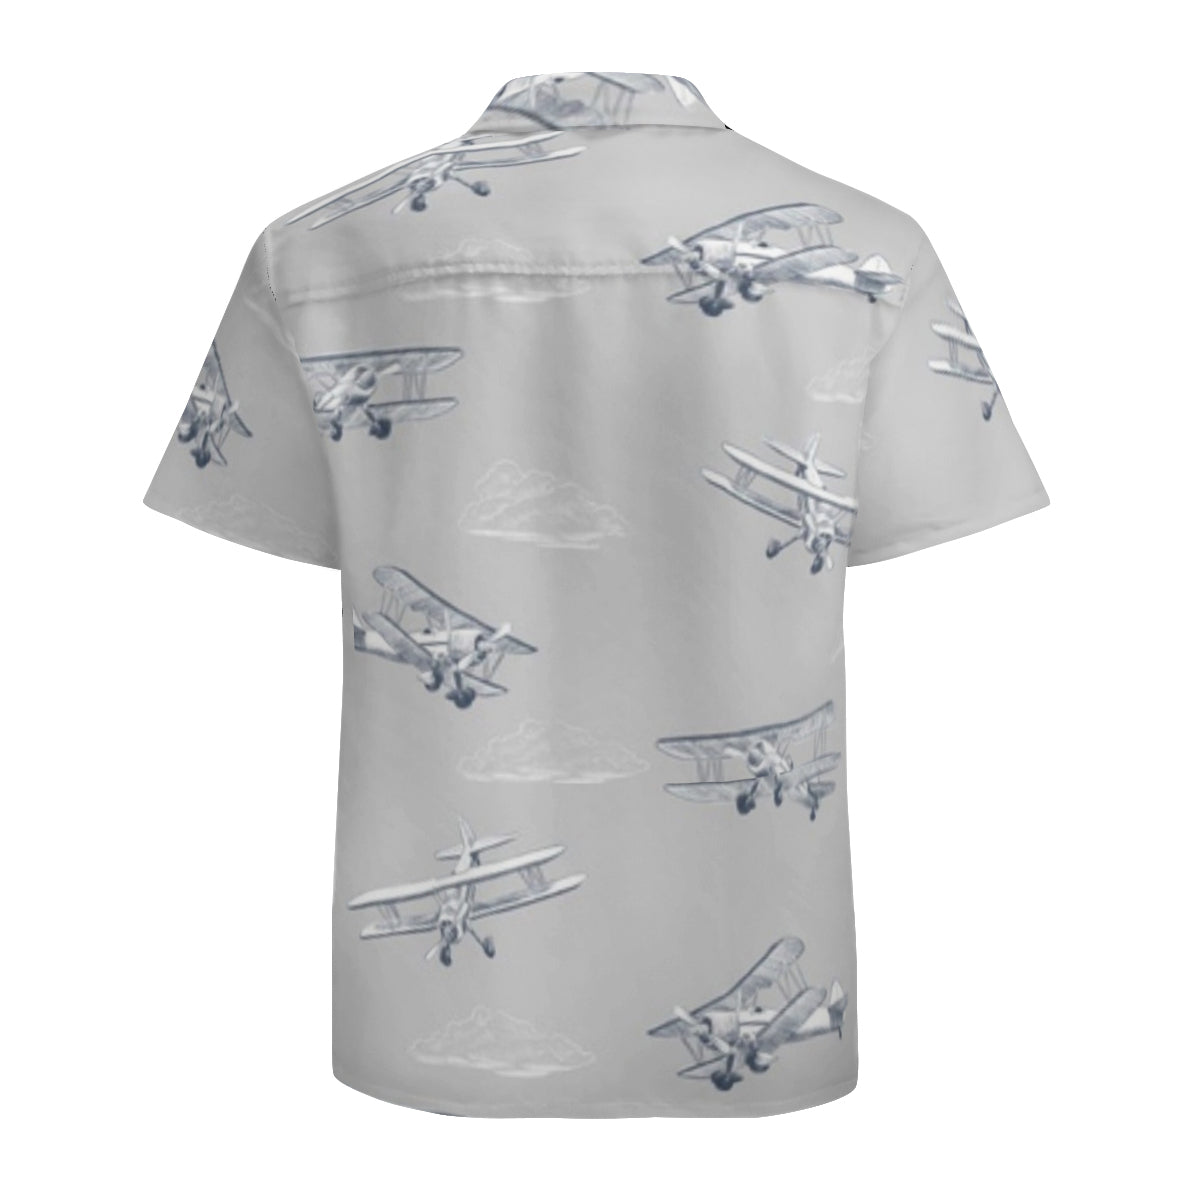 Hawaiian shirt - grey with airplanes